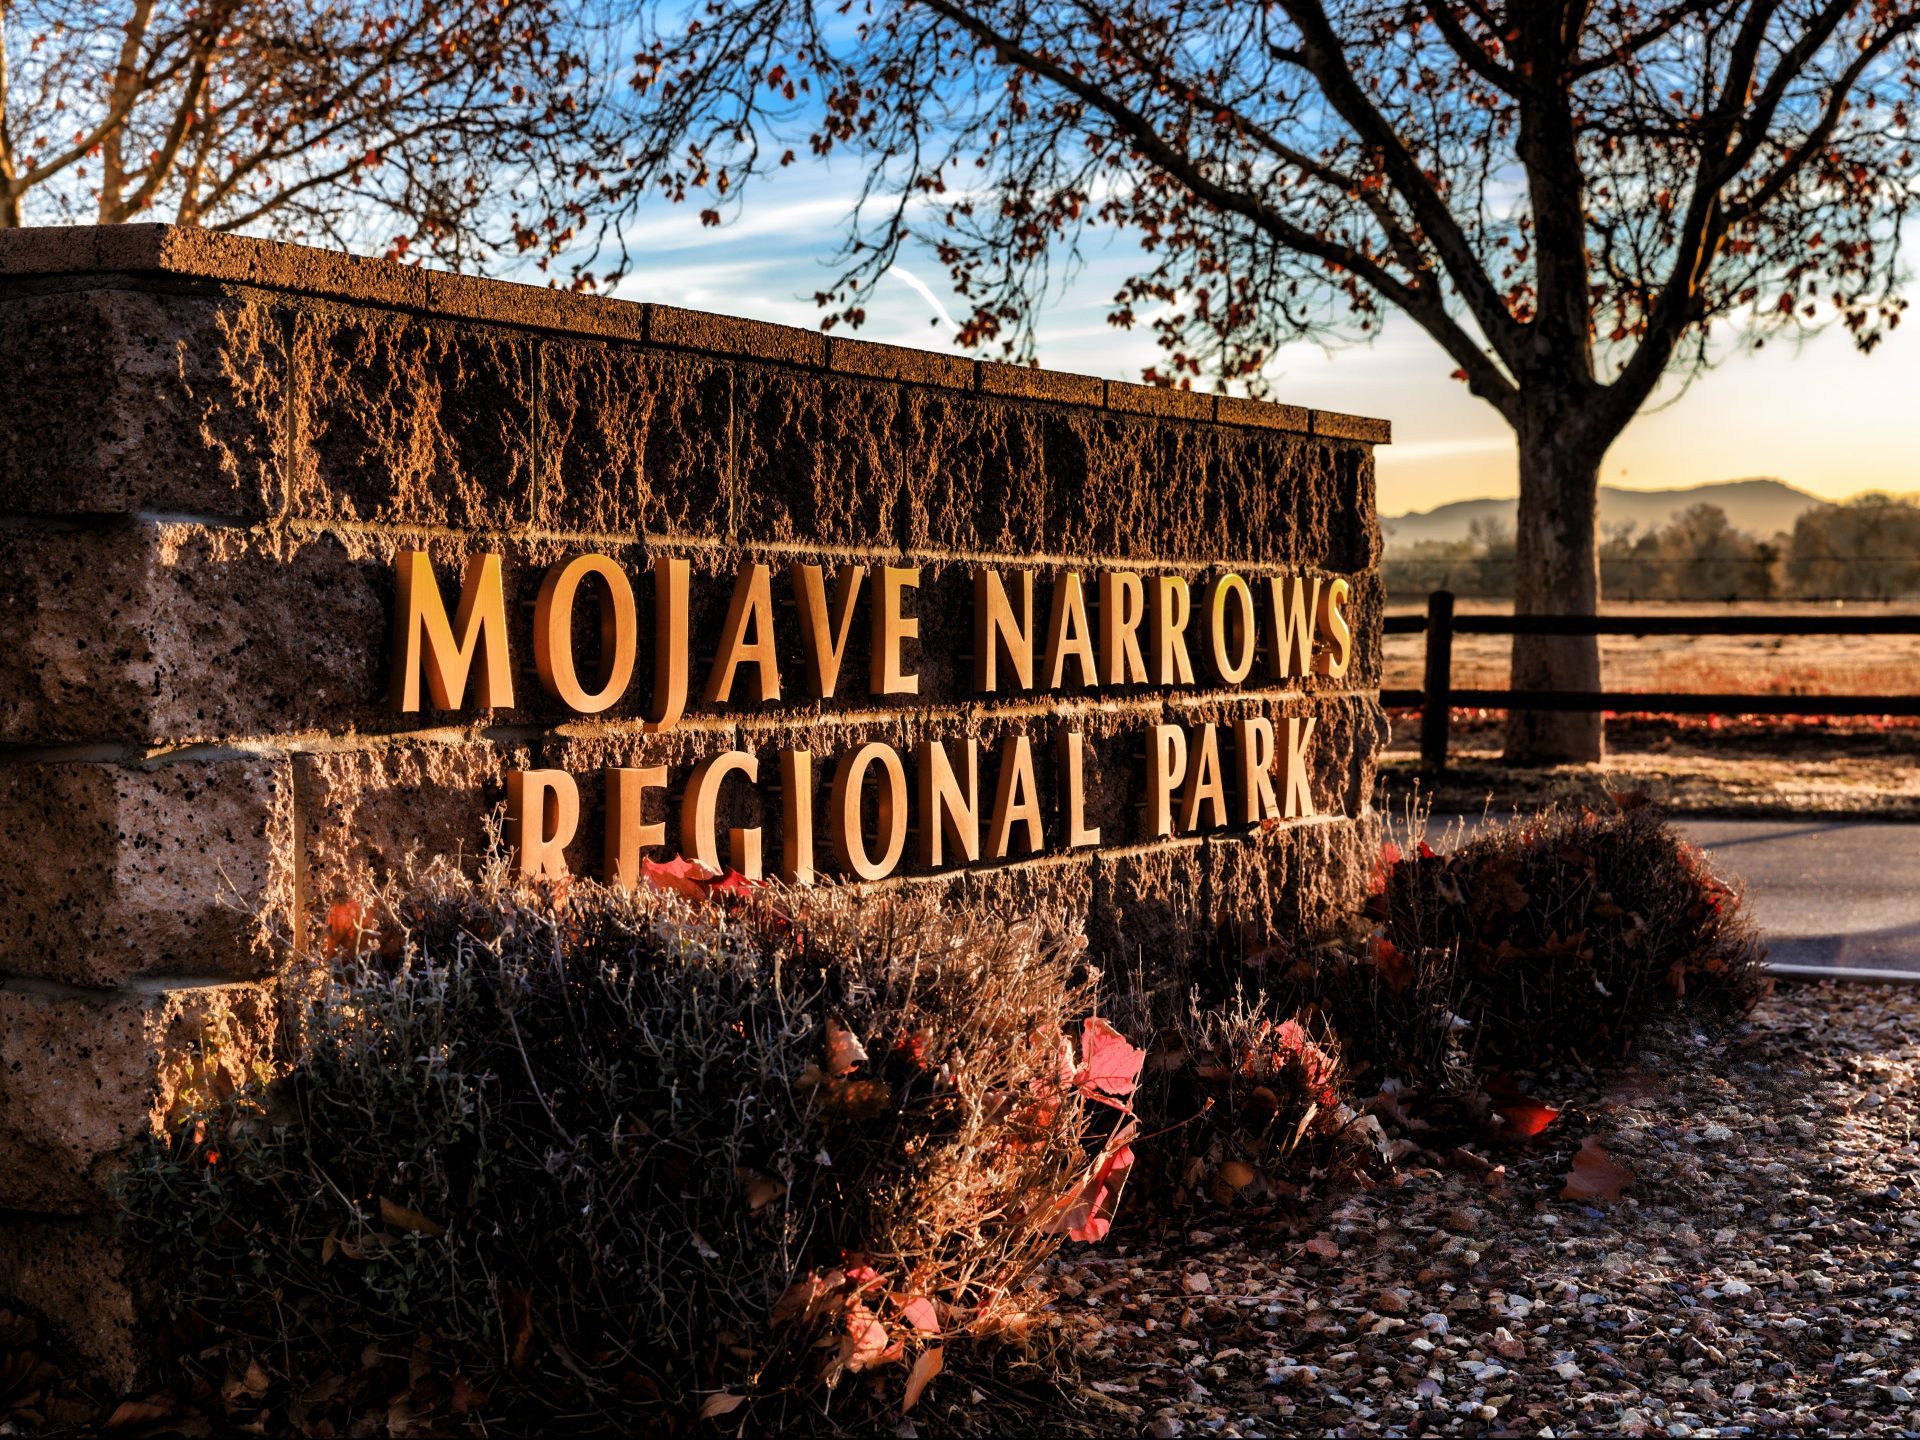 park sign at Mojave Narrows Regional Park